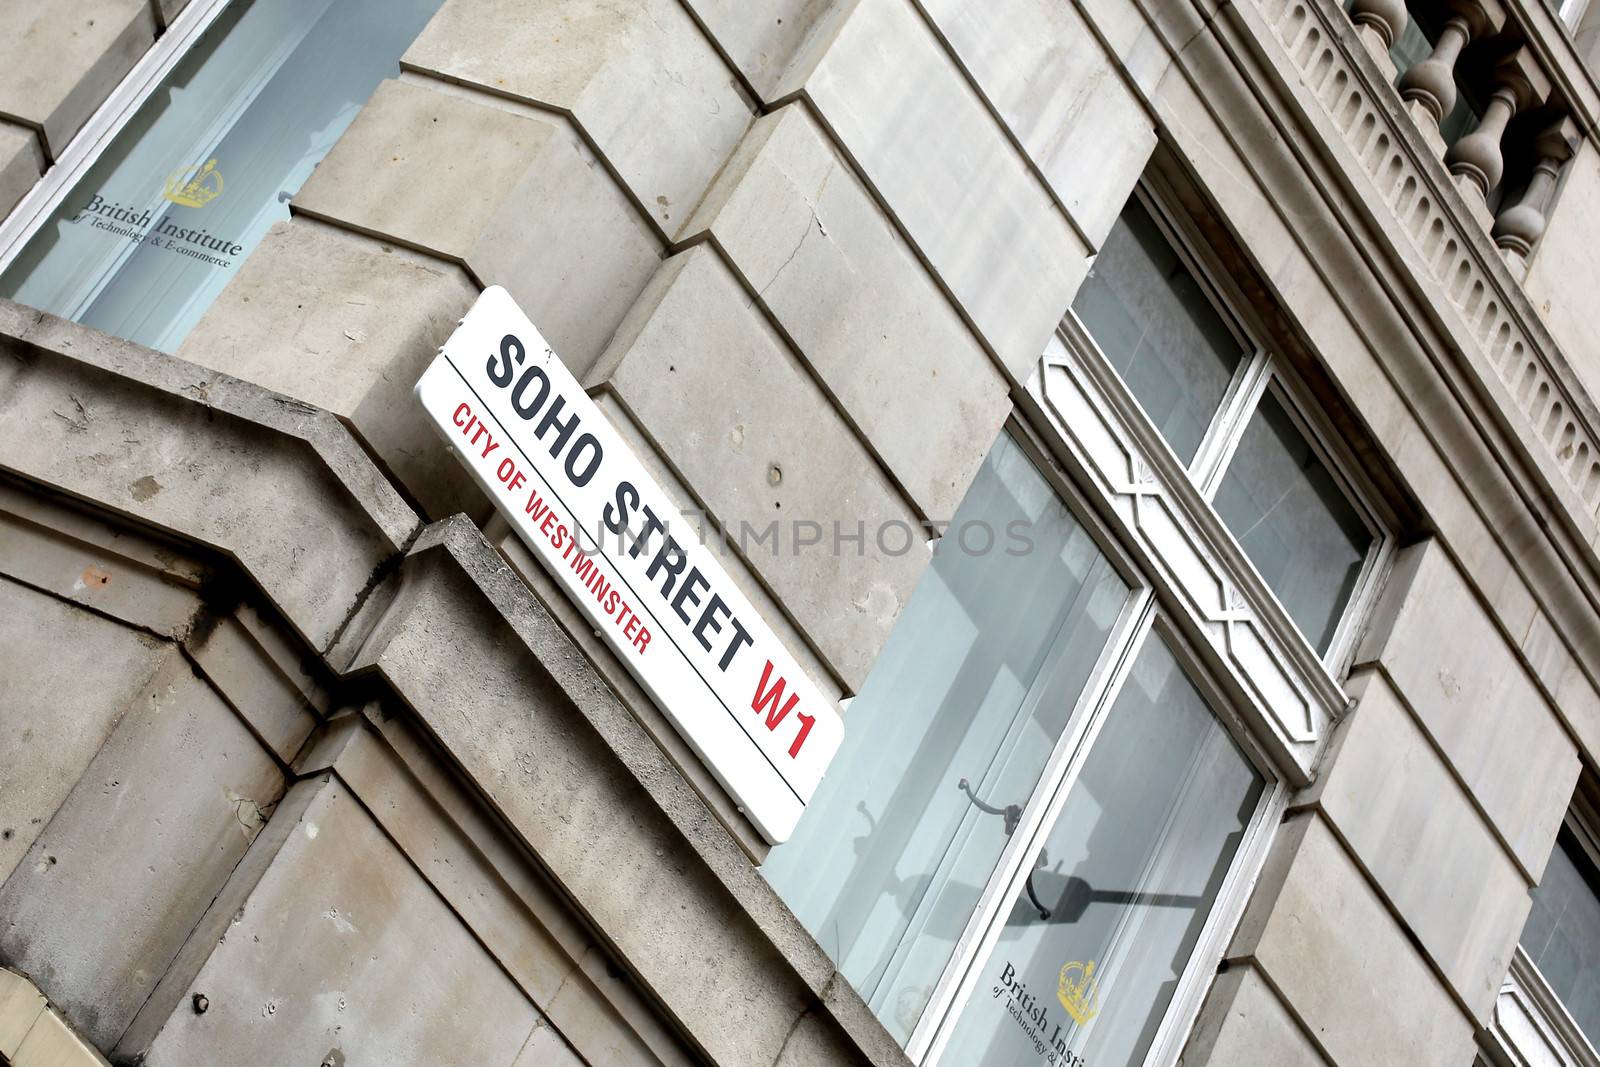 British Institute of Technology and E-Commerce Soho Street London